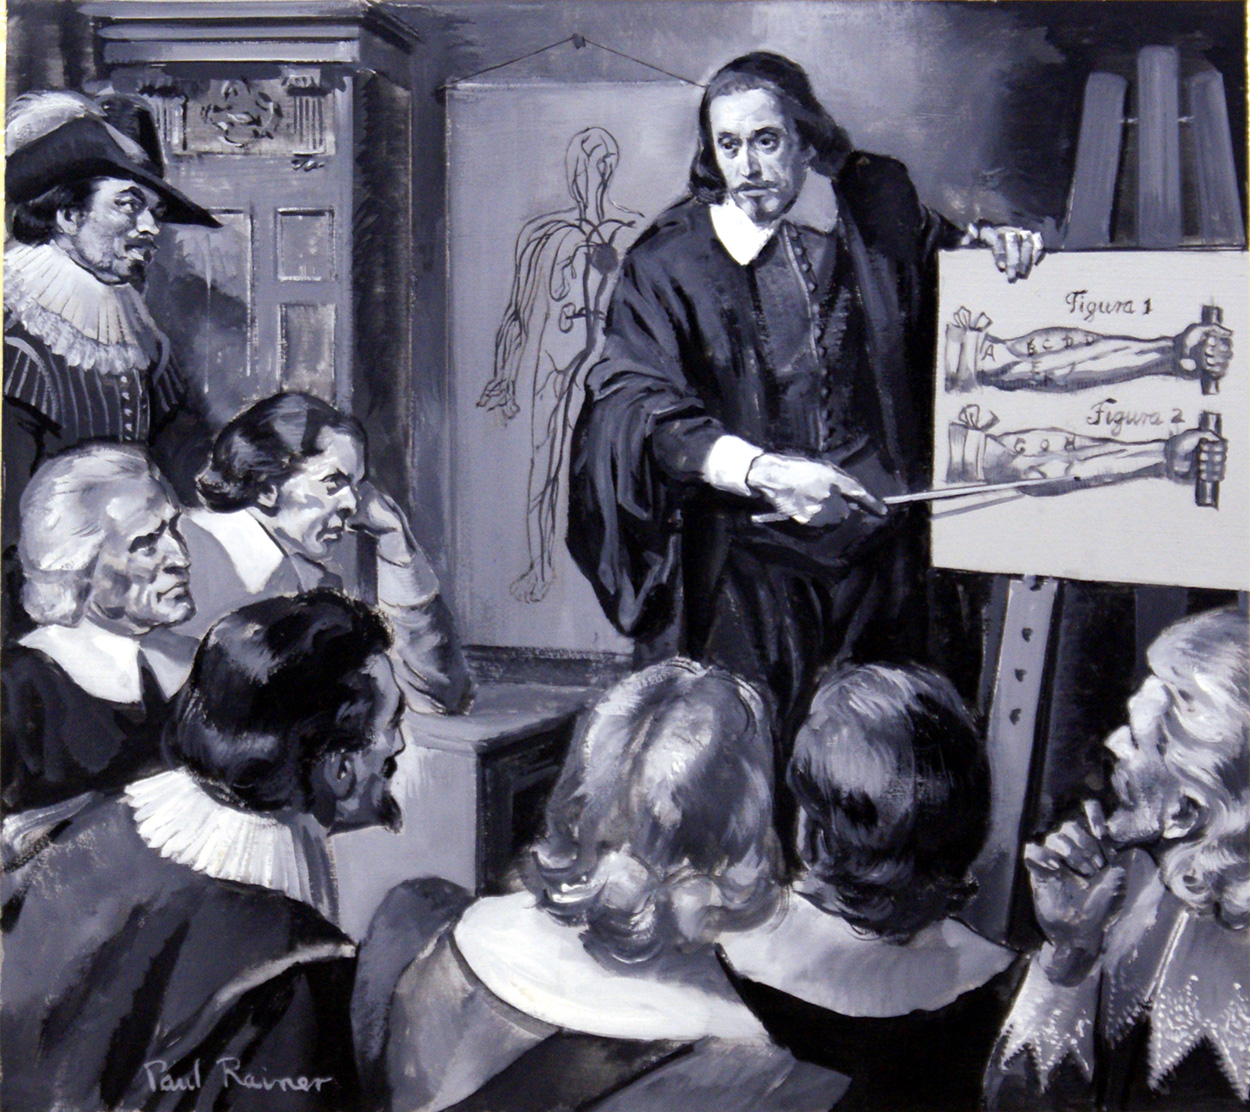 William Harvey: Man of Medicine (Original) (Signed) art by Paul Rainer Art at The Illustration Art Gallery